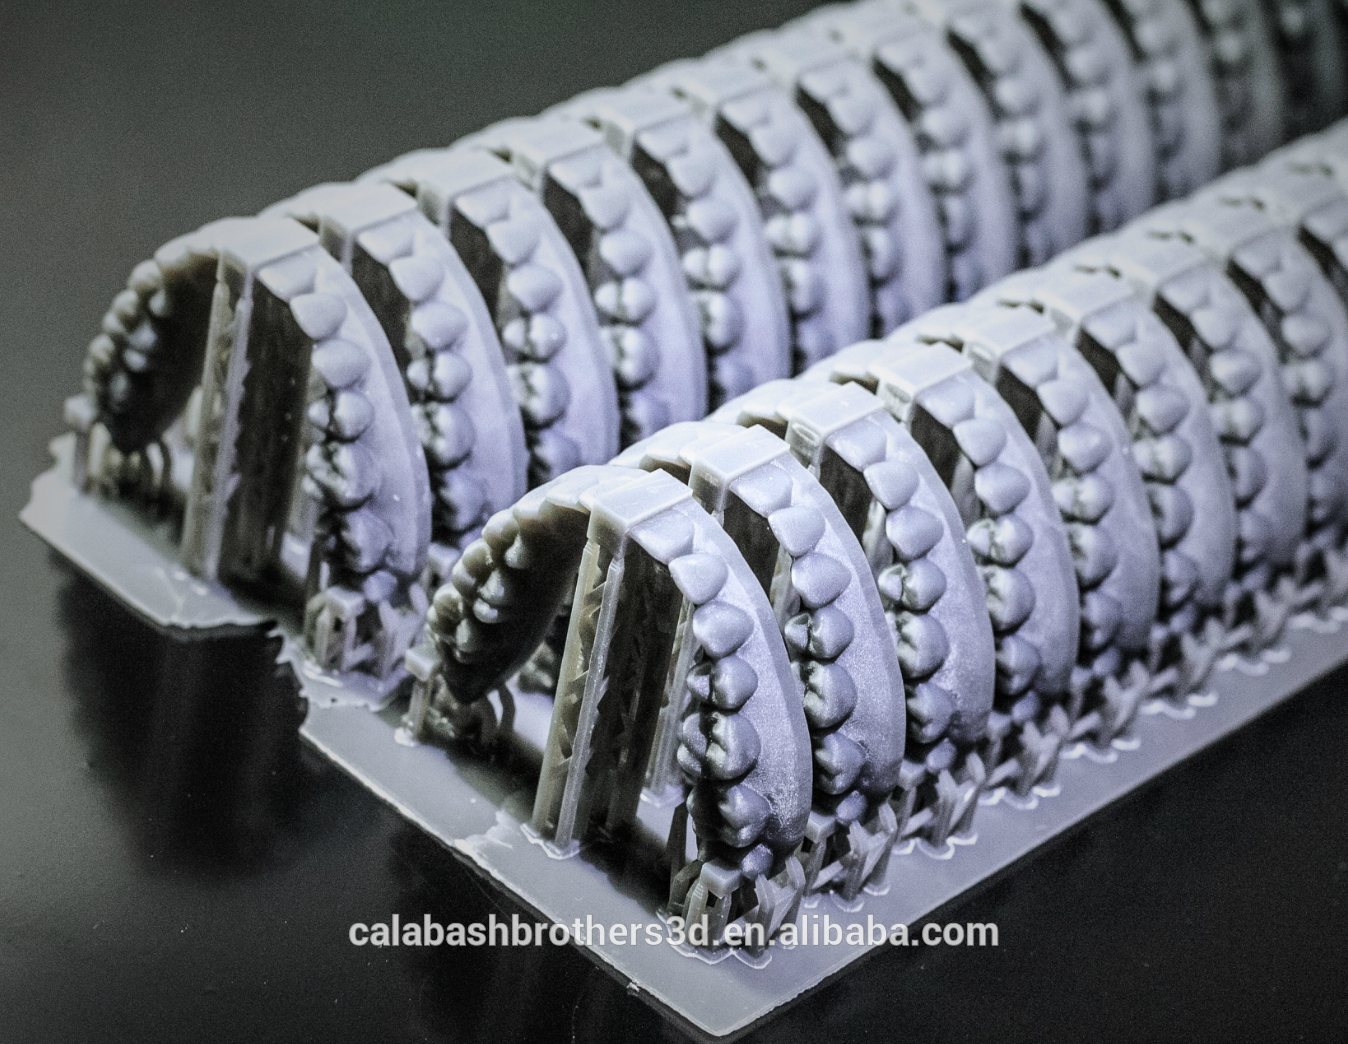 DLP 4K 3840*2160 Resolution 3D Printer Jewelry Professional 3D Printer